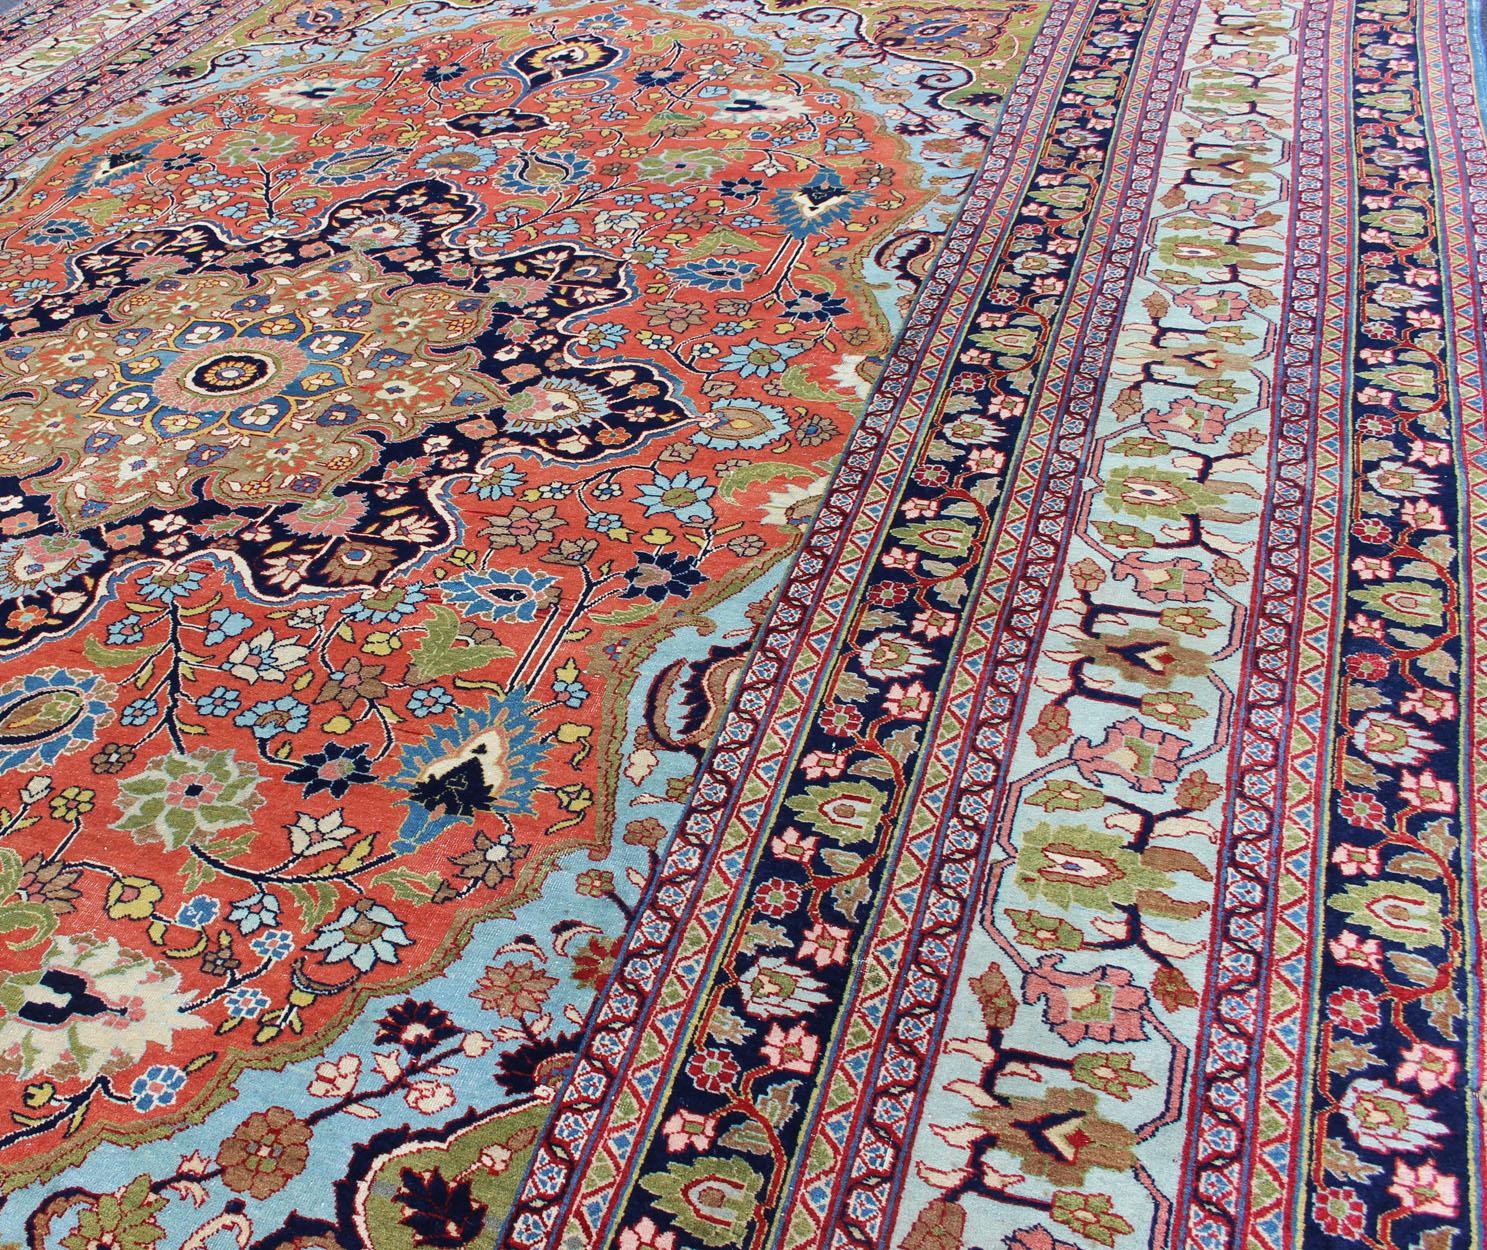 Antique Fine Persian Classic Design Tabriz Rug in Orange, Blue & Multi Colors For Sale 1